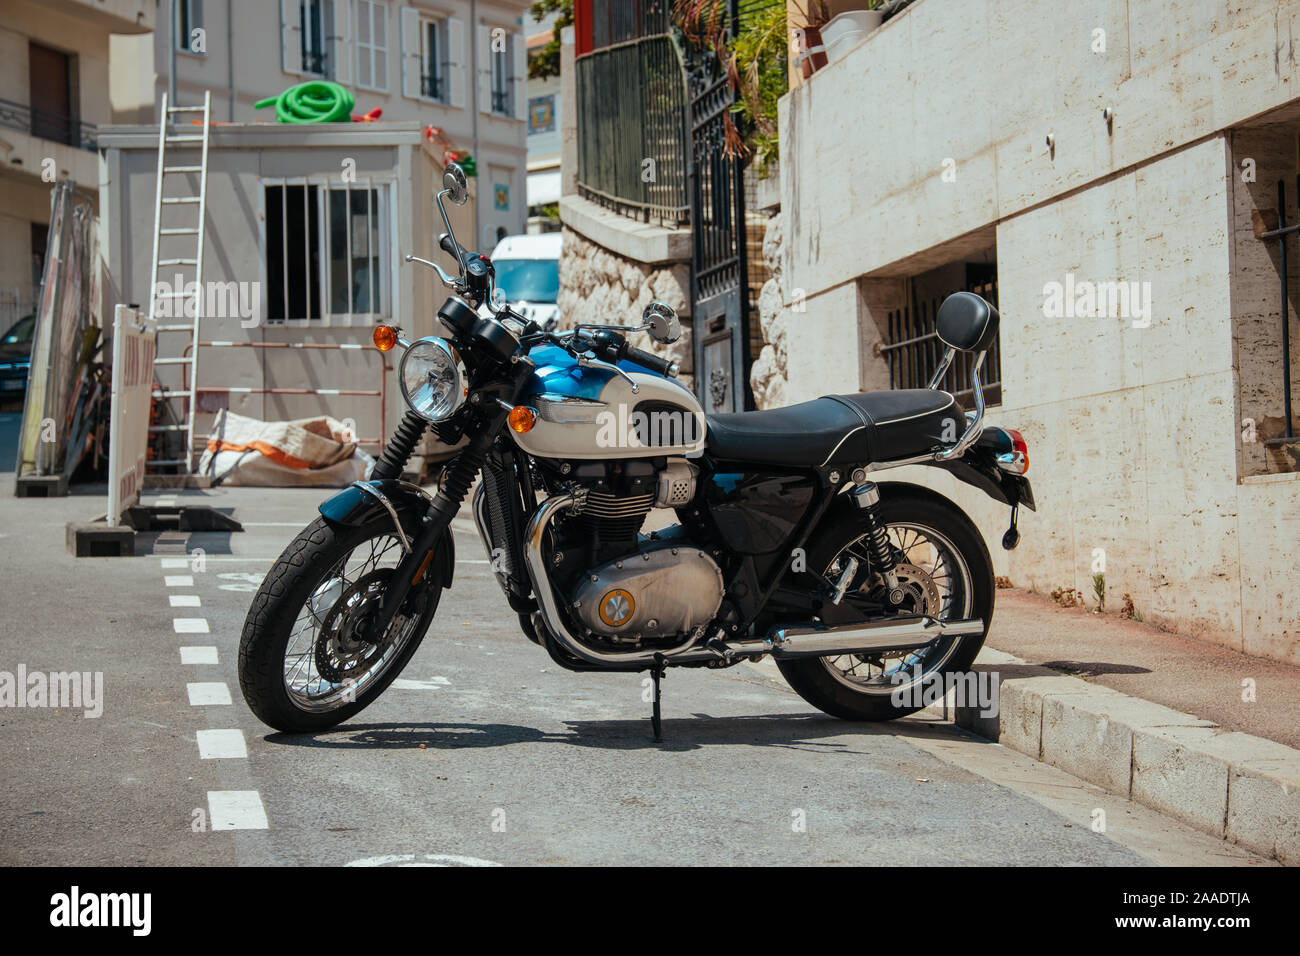 Motorbike, Bike, traditional two wheels transport in Europe, Monaco City Stock Photo